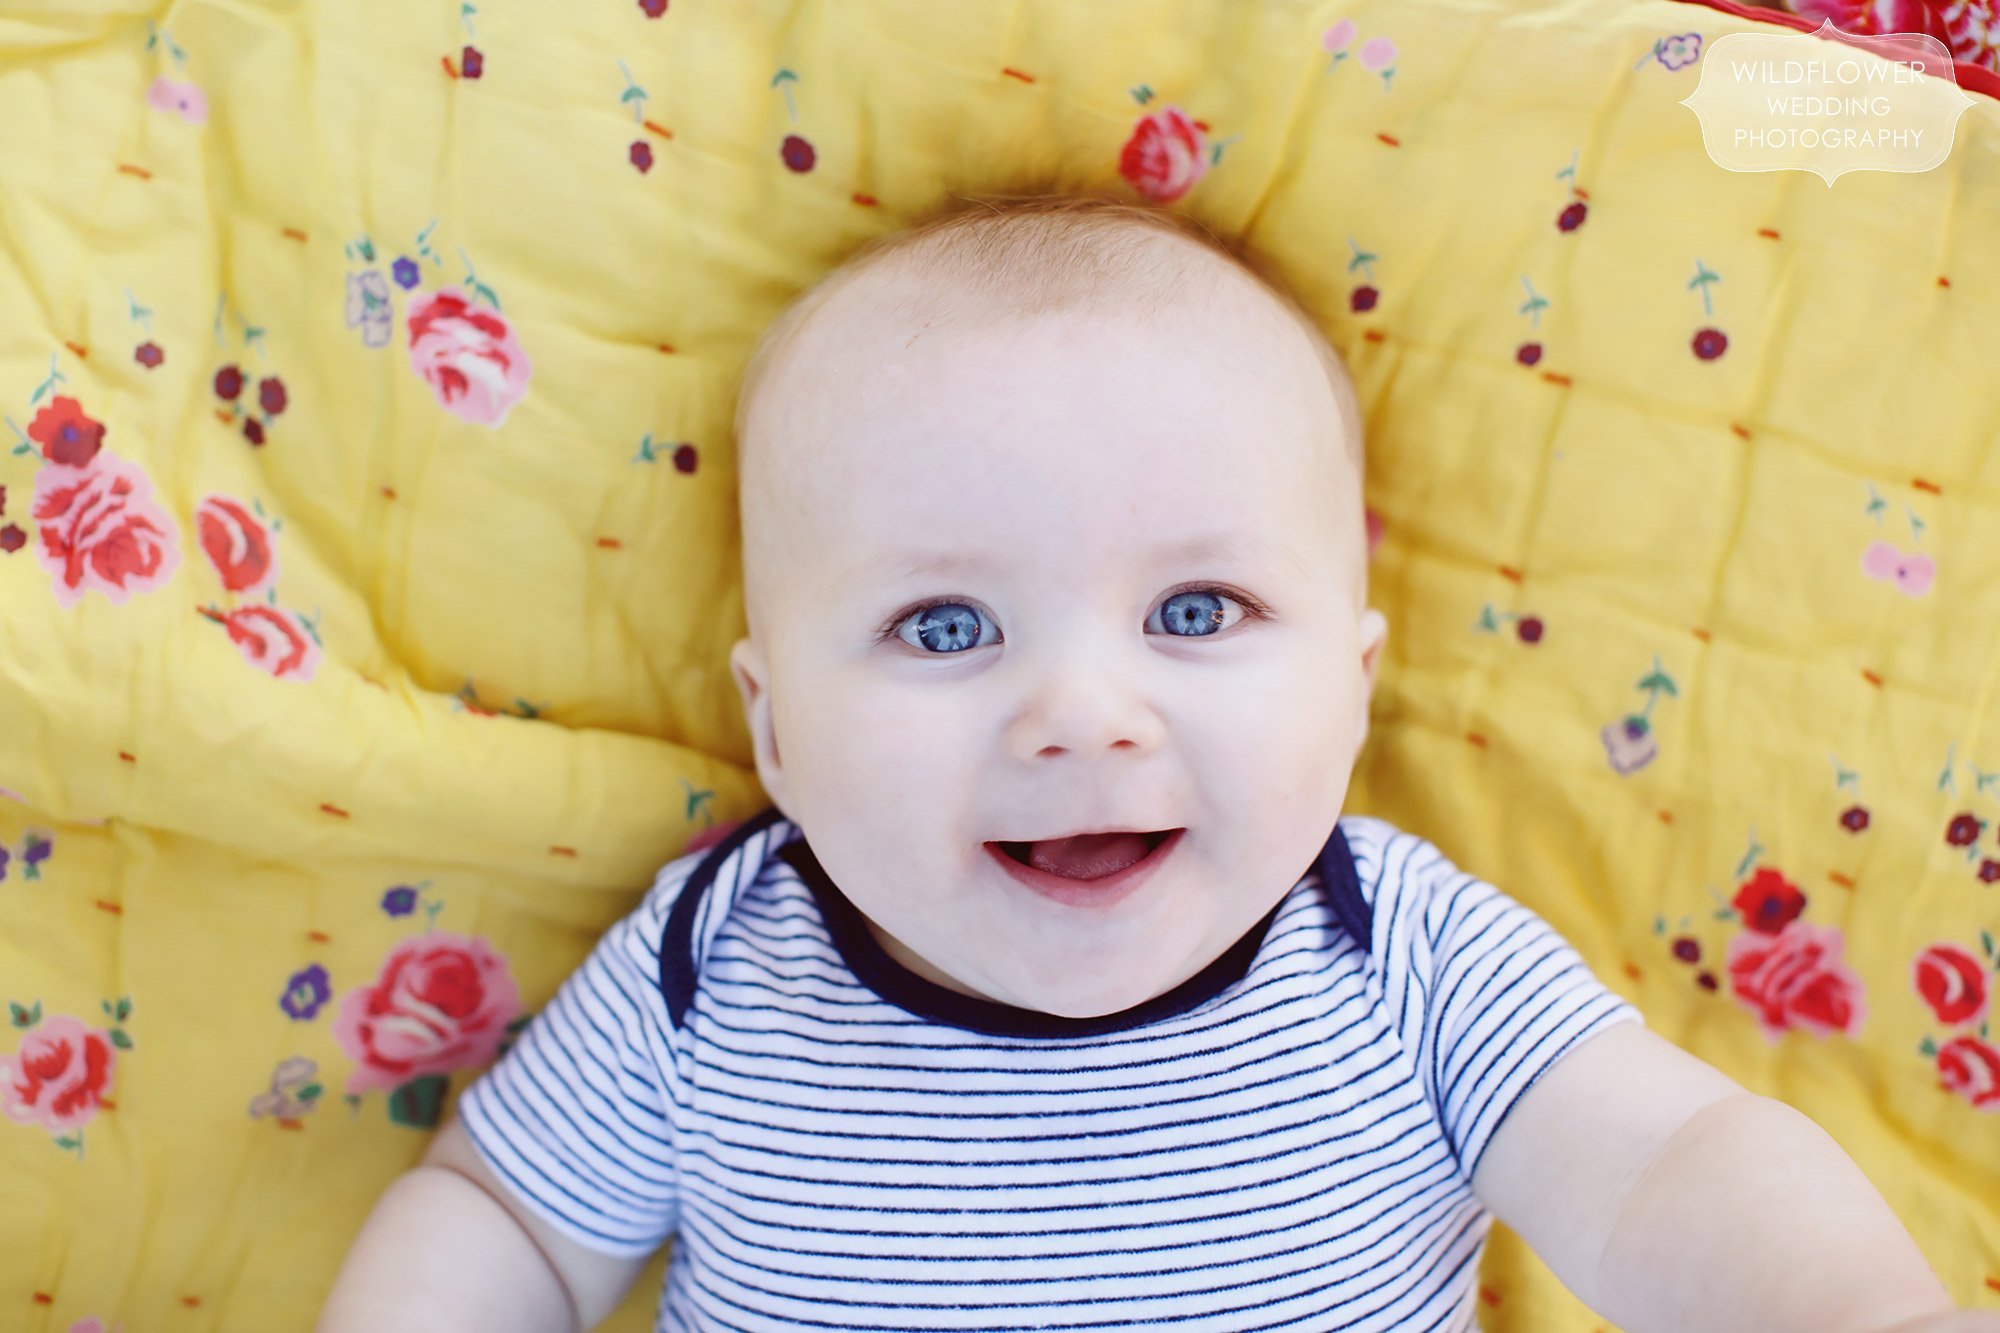 Smiling baby face looking up at camera with close up lens at Loose Park in MO.